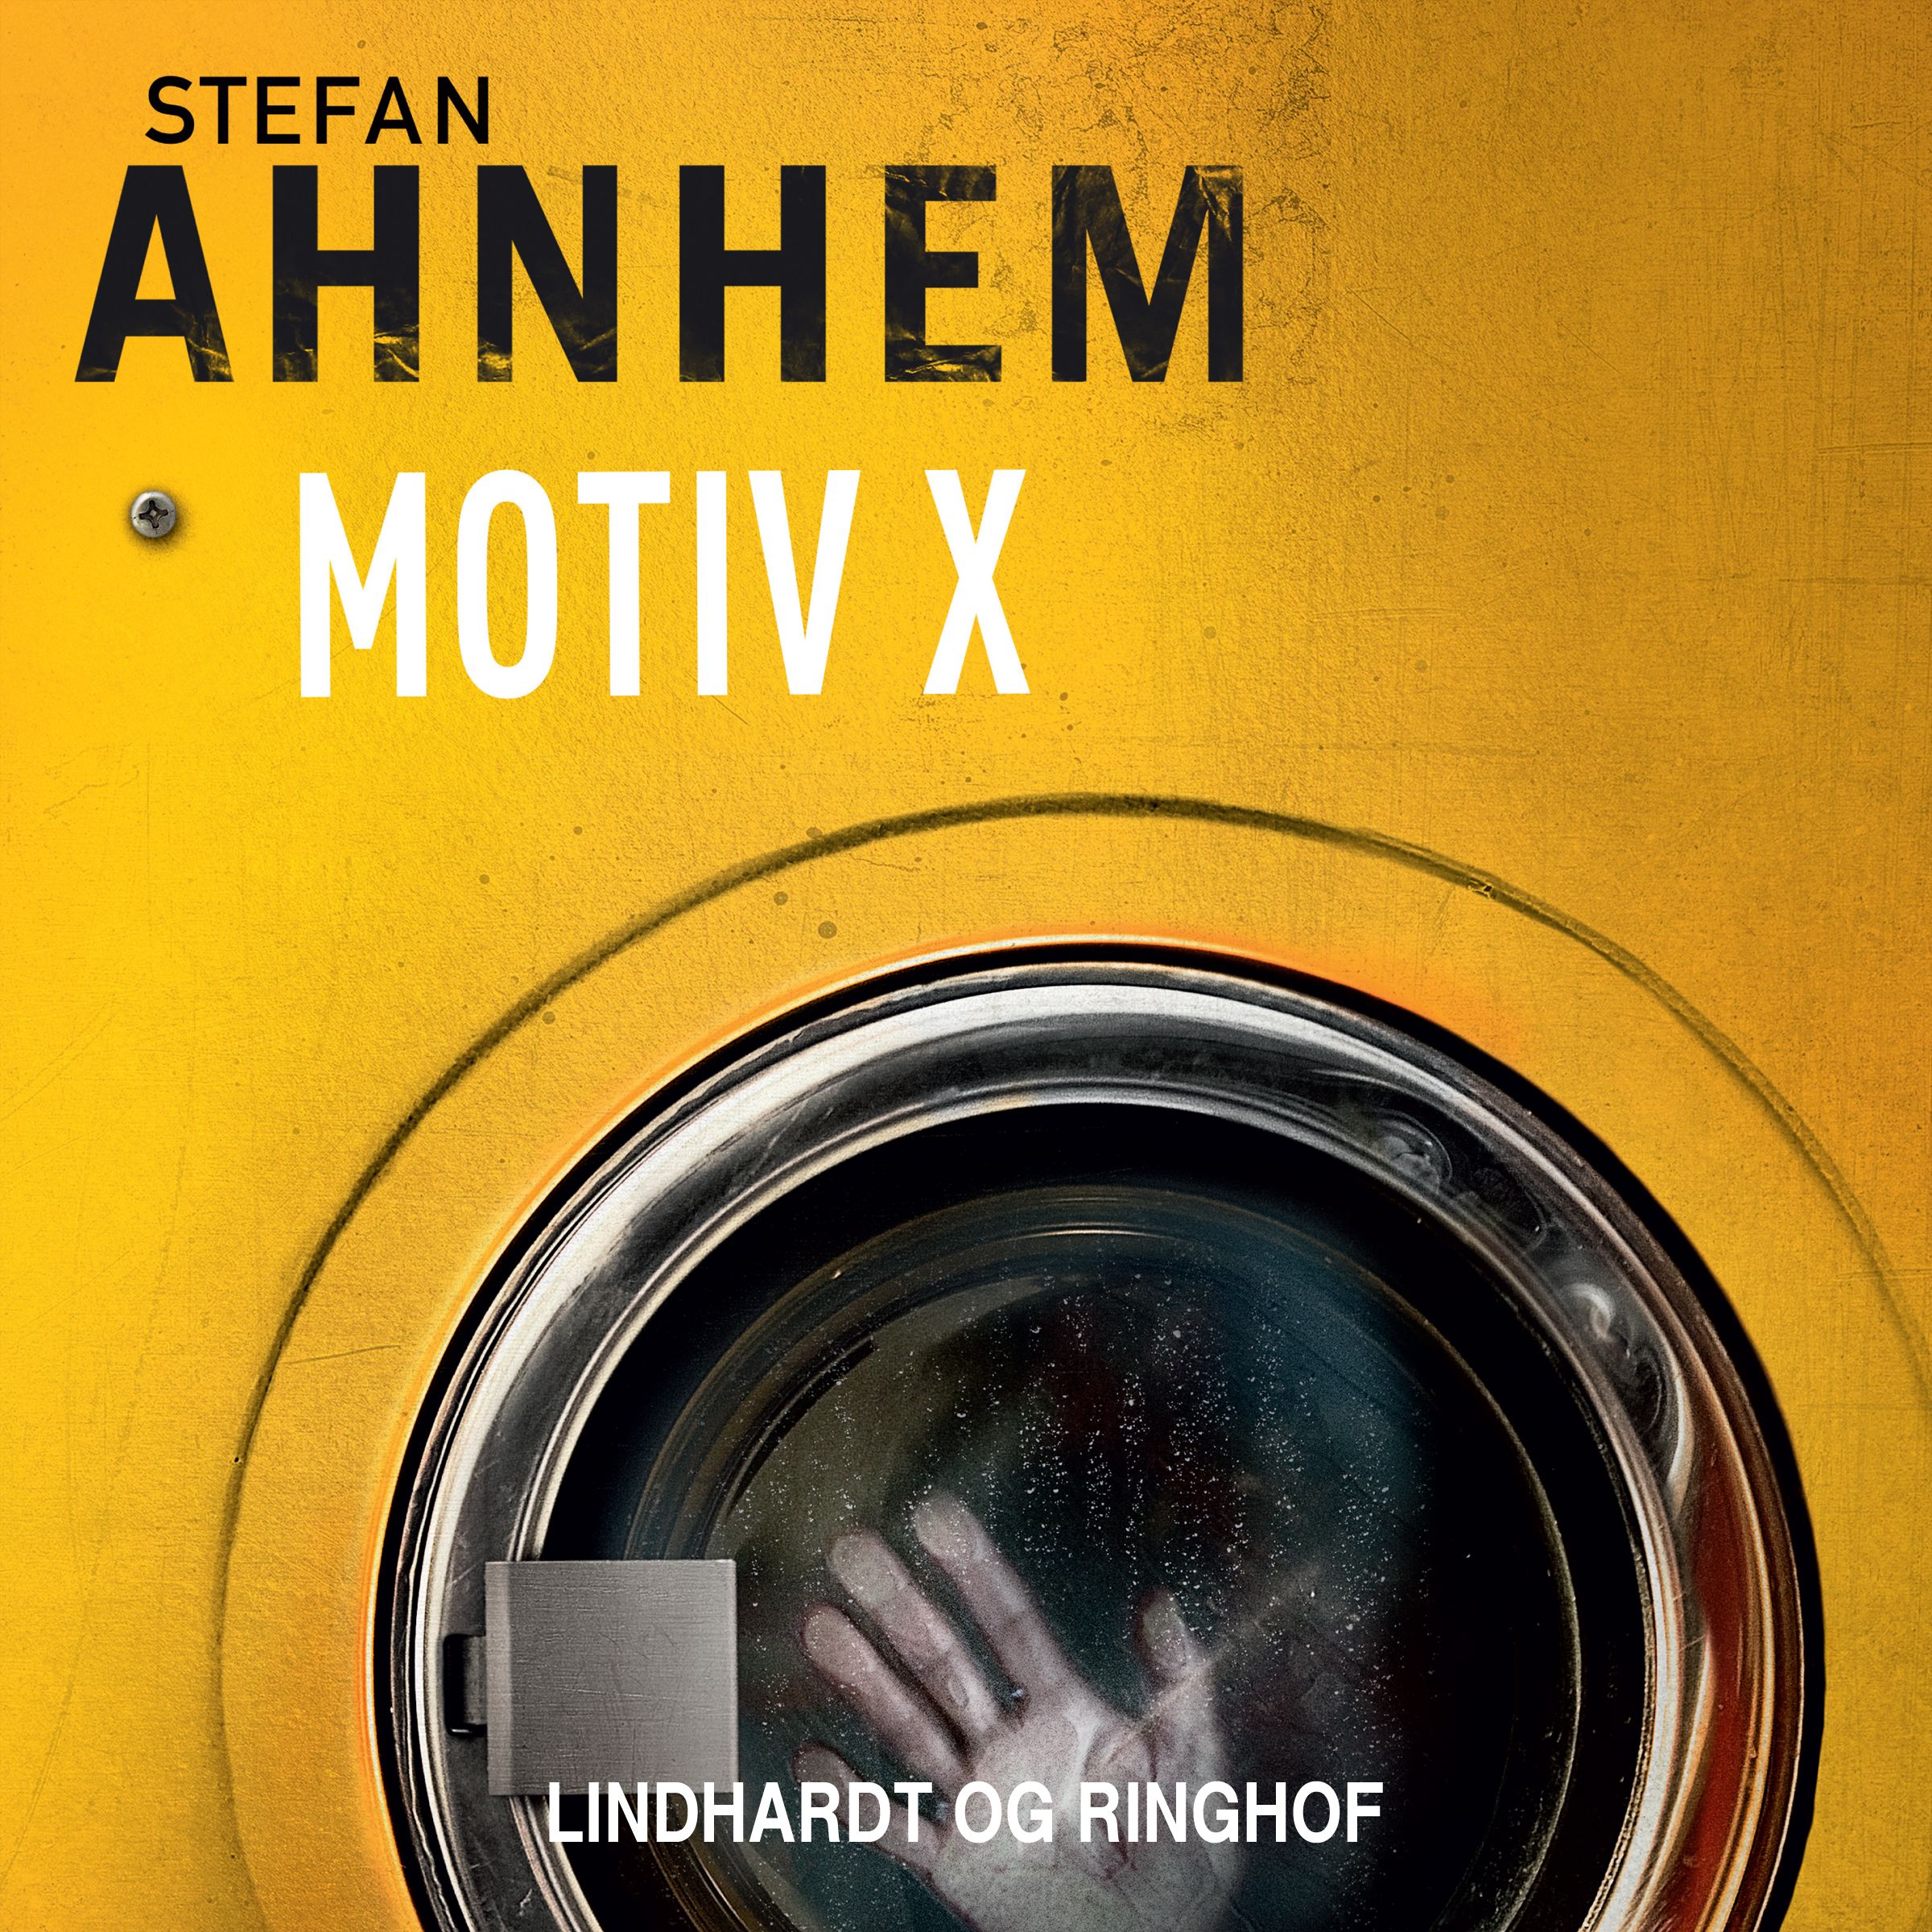 Motiv X, ljudbok av Stefan Ahnhem